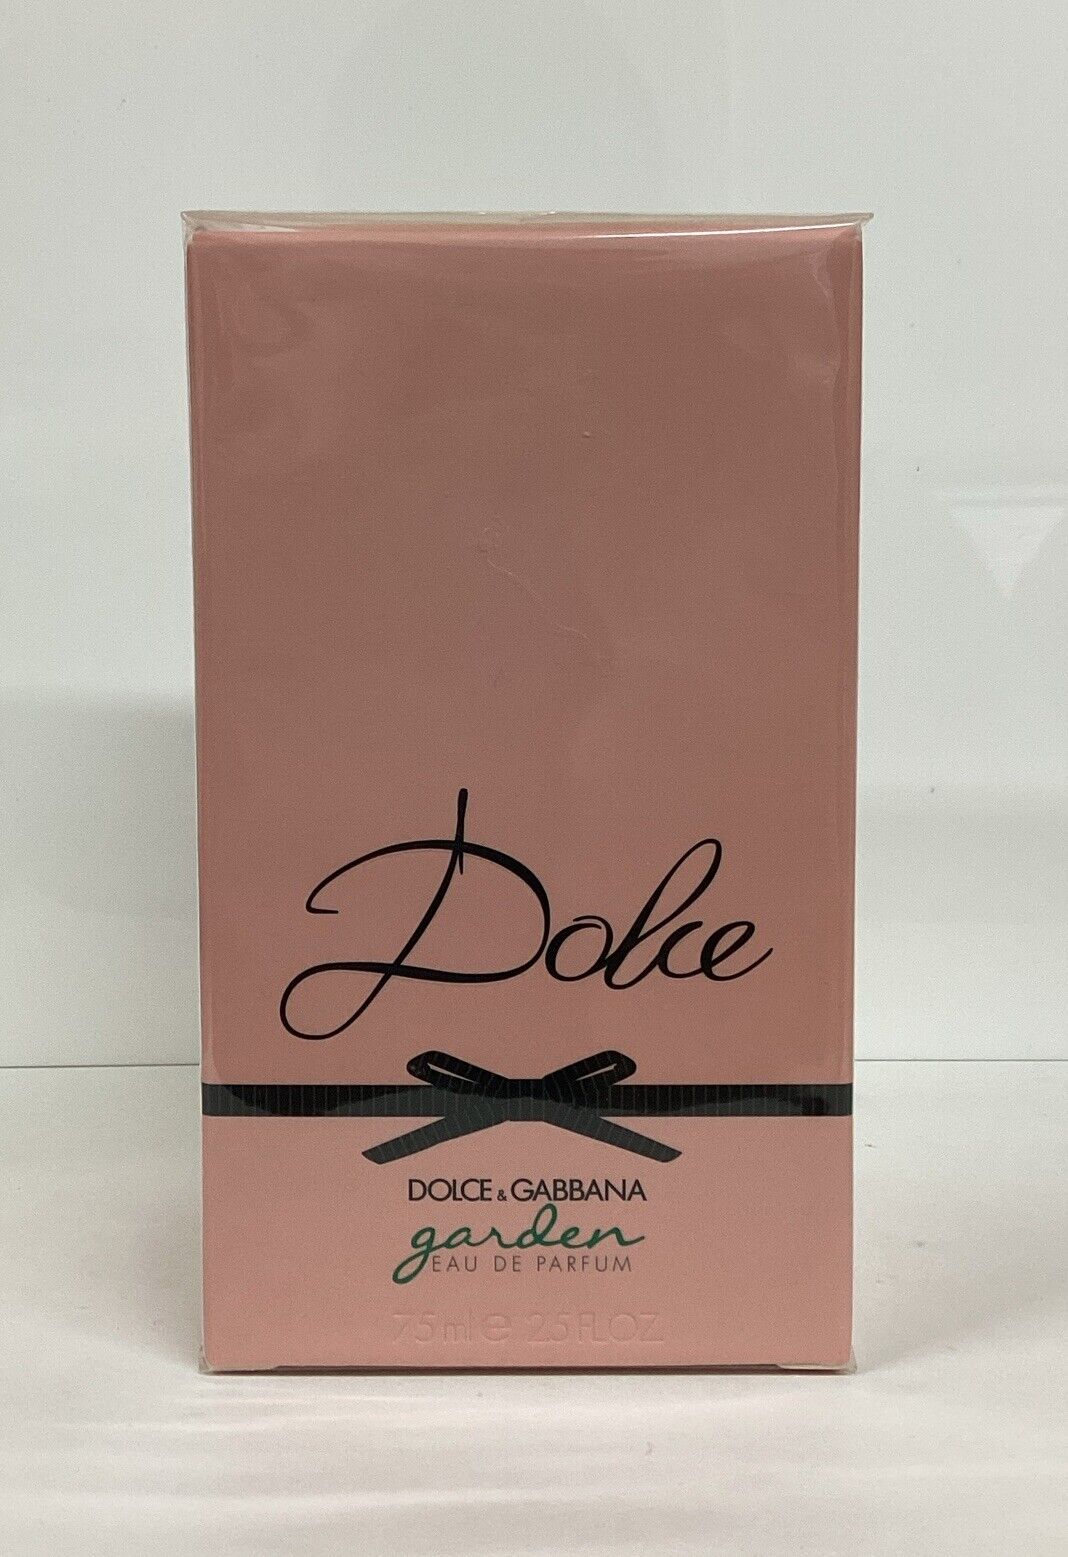 Dolce Gabbana Garden Eau De Parfum 2.5oz New, Sealed As Pictured